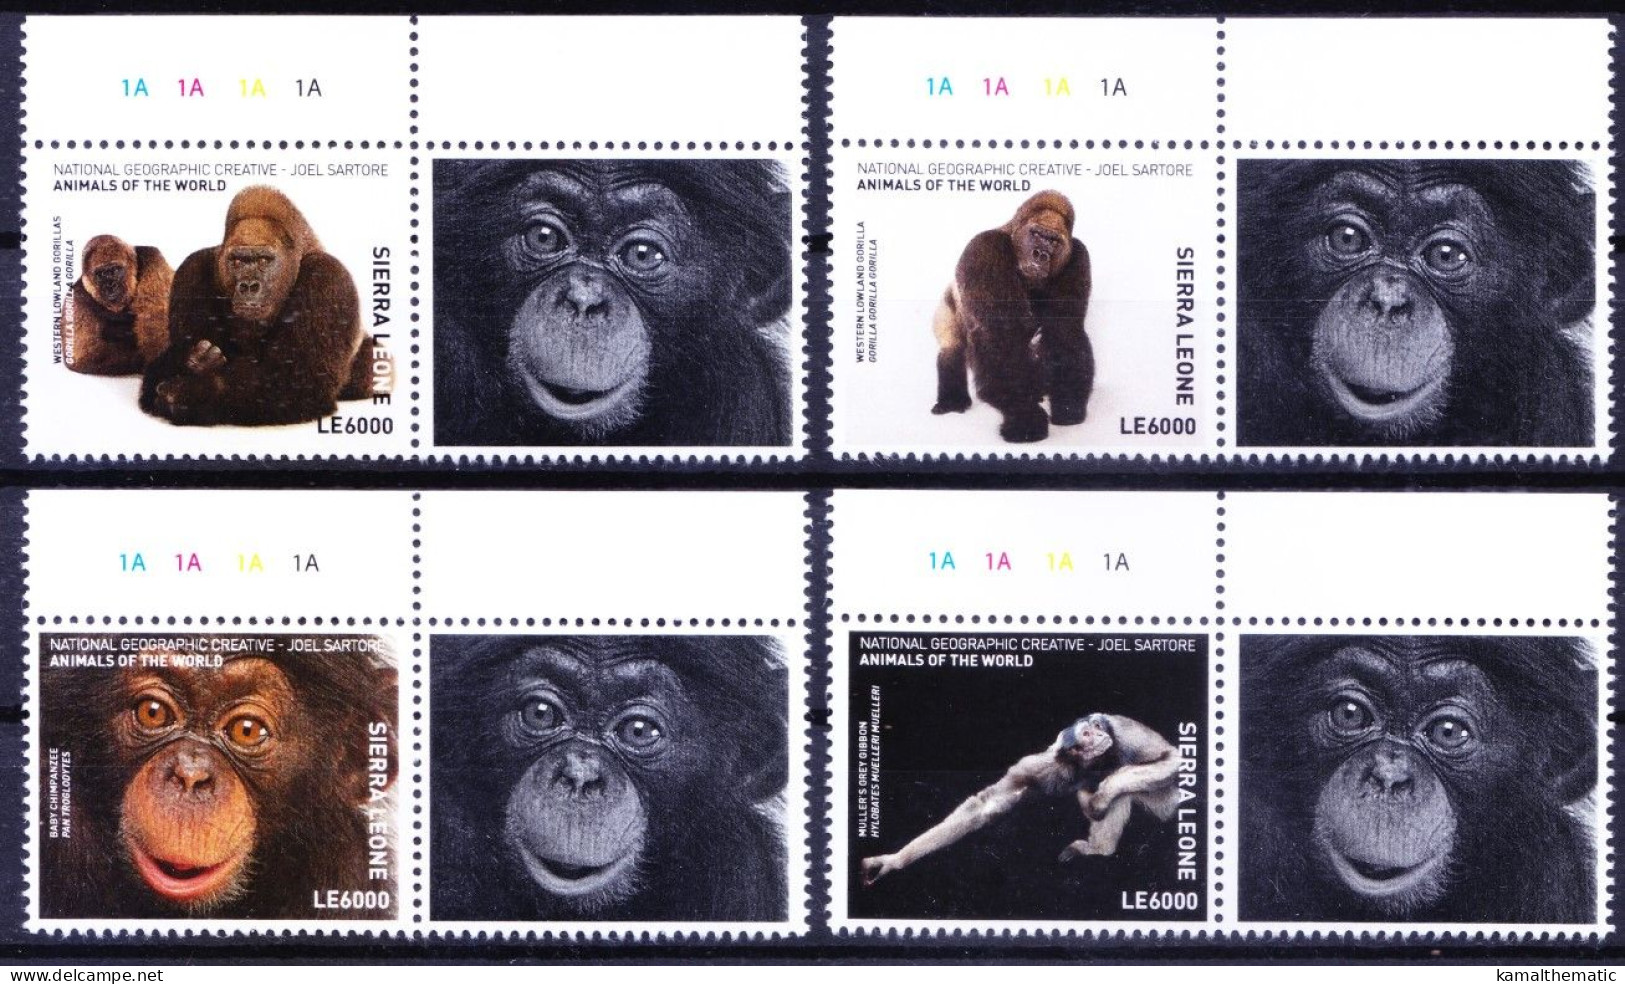 Apes Orangutan Gorilla, Monkeys, Sierra Leone 2017 MNH 4v+Label Color Guide (a), Wild Animals - Gorillas